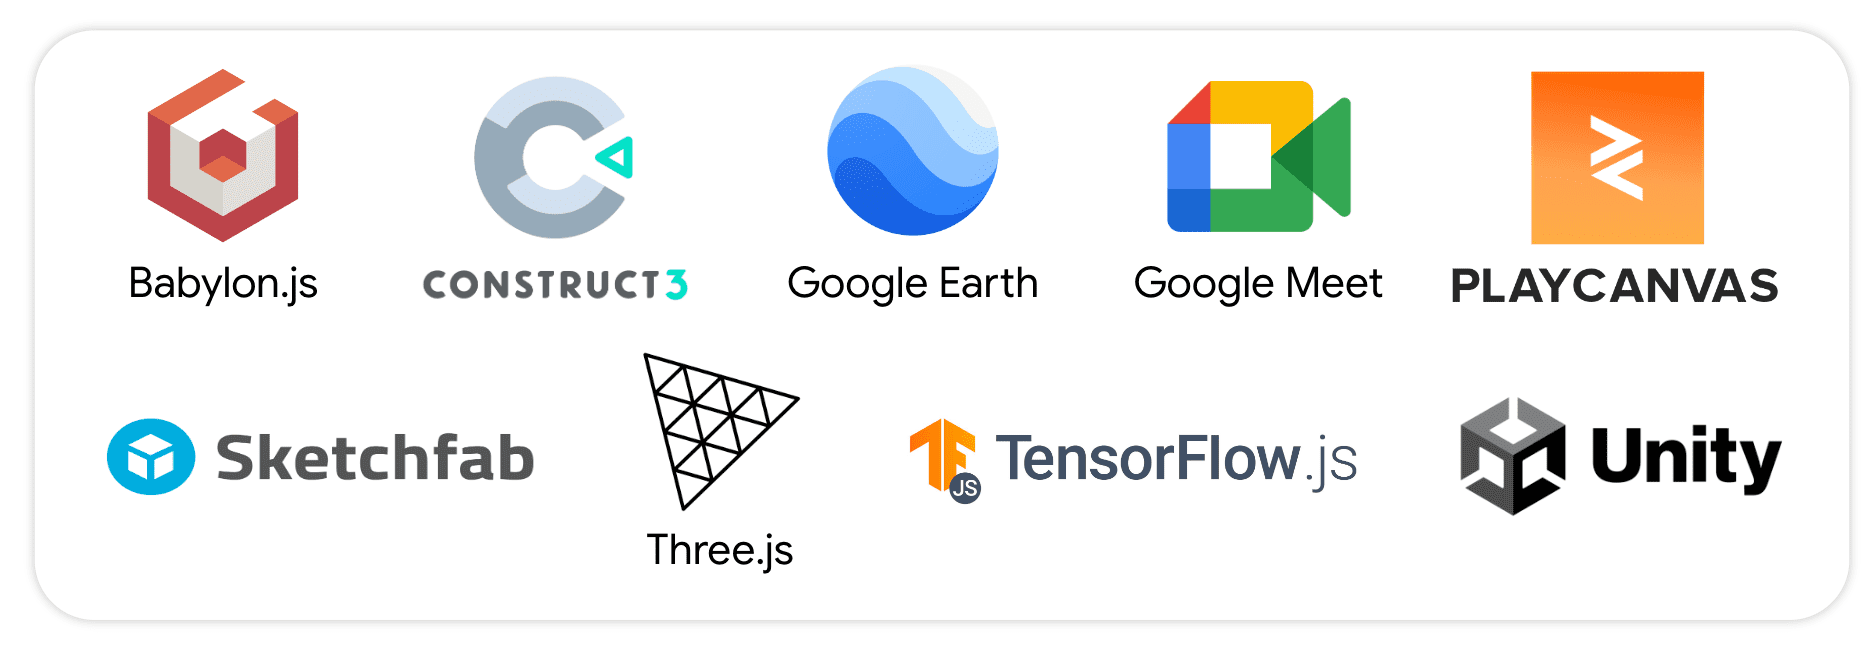 Babylon.js, Construct 3, Google Earth, Google Meet, PlayCanvas, Sketchfab, Three.JS, TensorFlow.js และ Unity